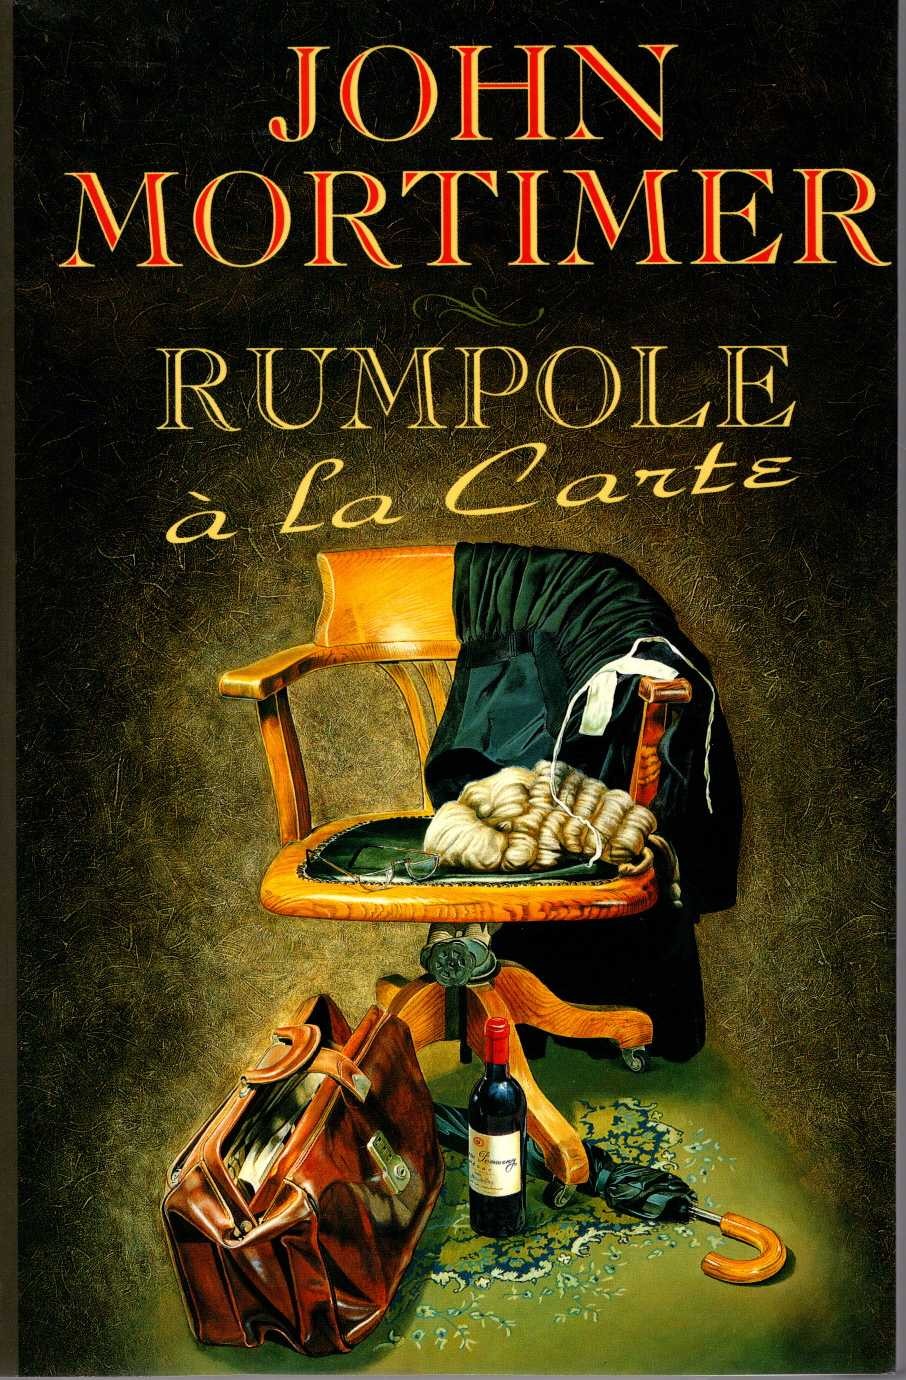 RUMPOLE A LA CARTE front book cover image